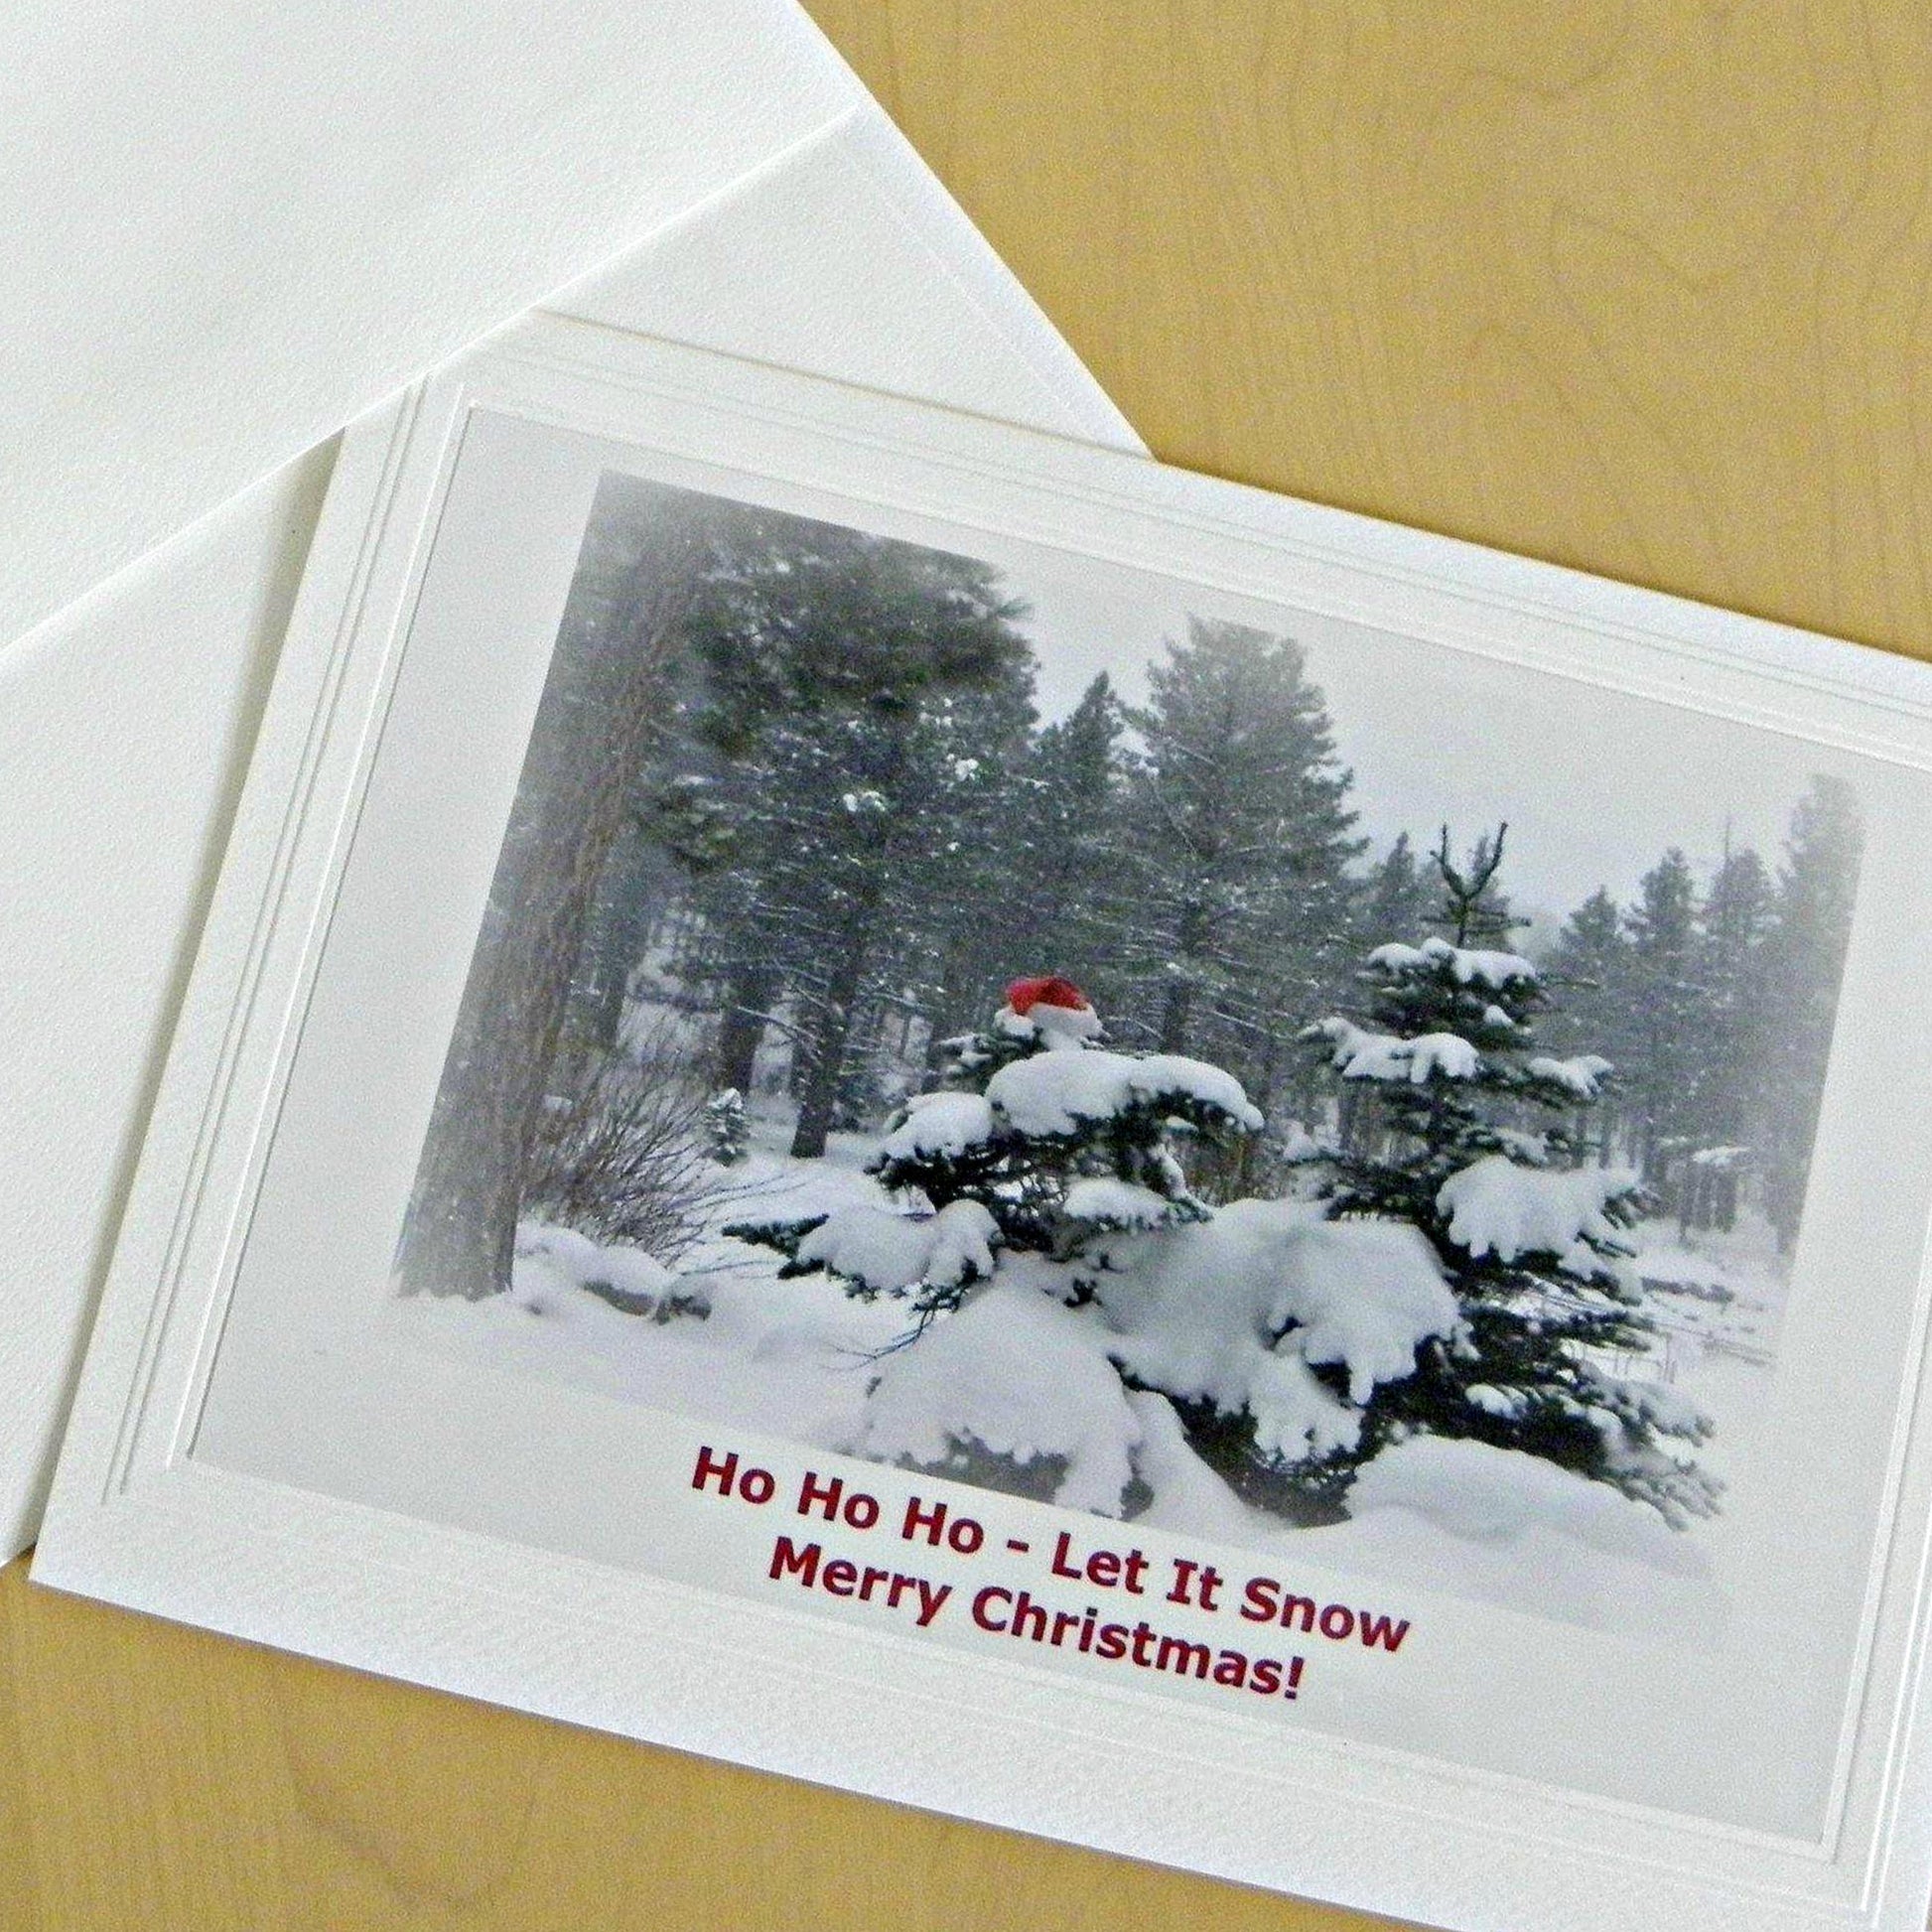 Ho Ho Ho - Let It Snow Merry Christmas card